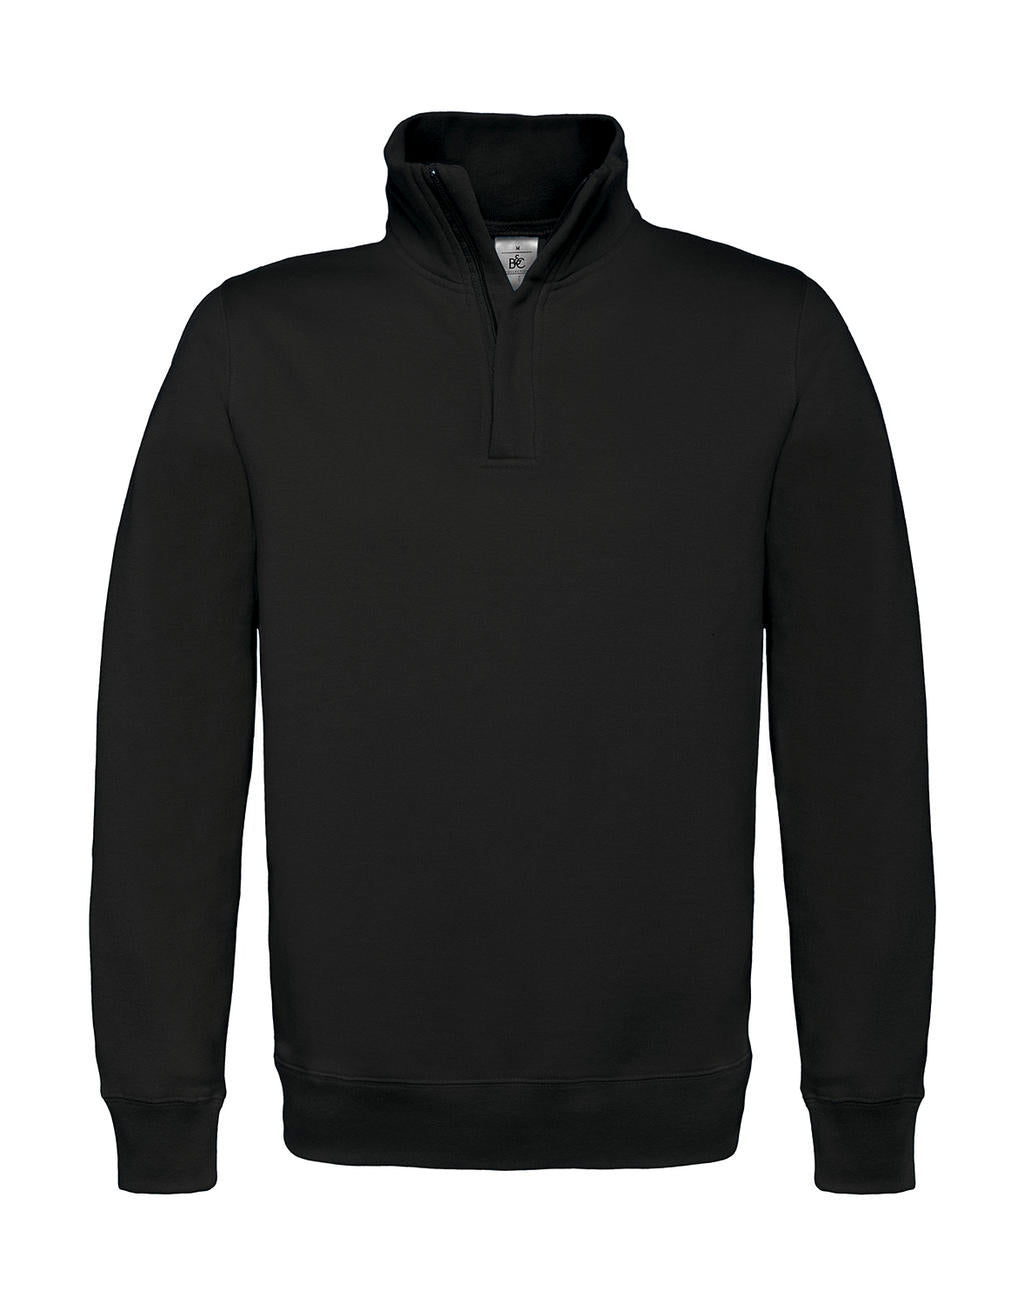 B&C Unisex Zipper Sweatshirt